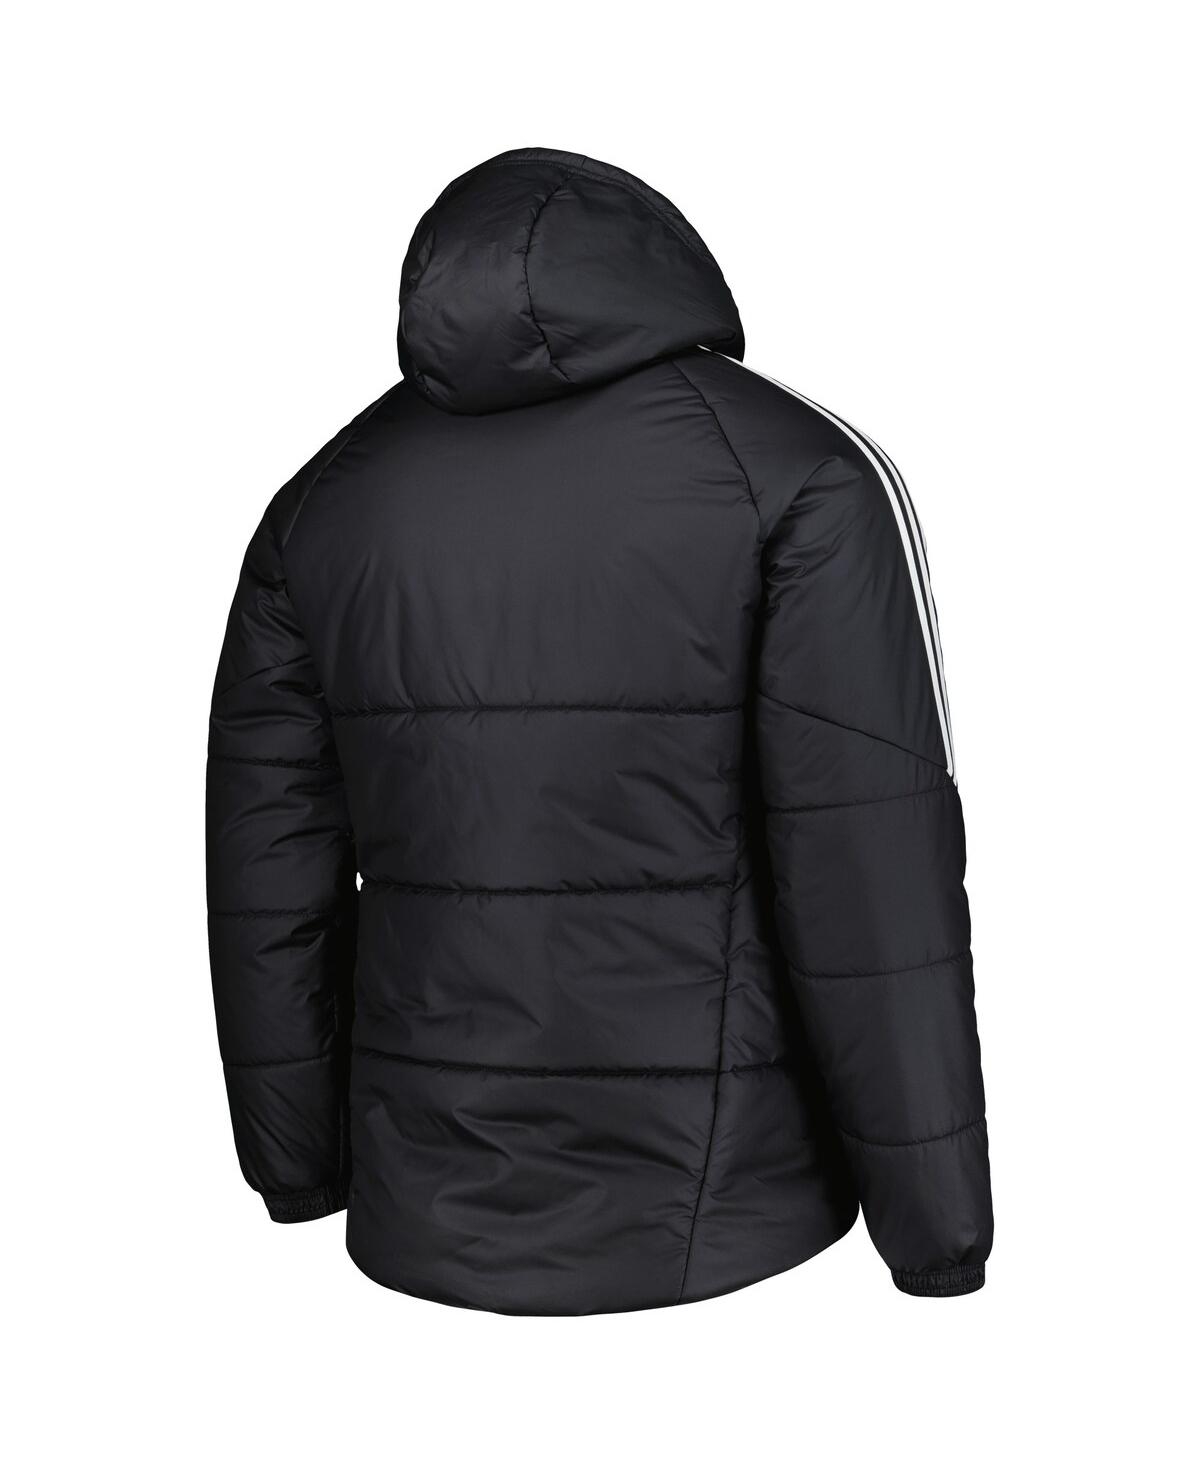 Shop Adidas Originals Men's Adidas Black Portland Timbers Winter Raglan Full-zip Hoodie Jacket